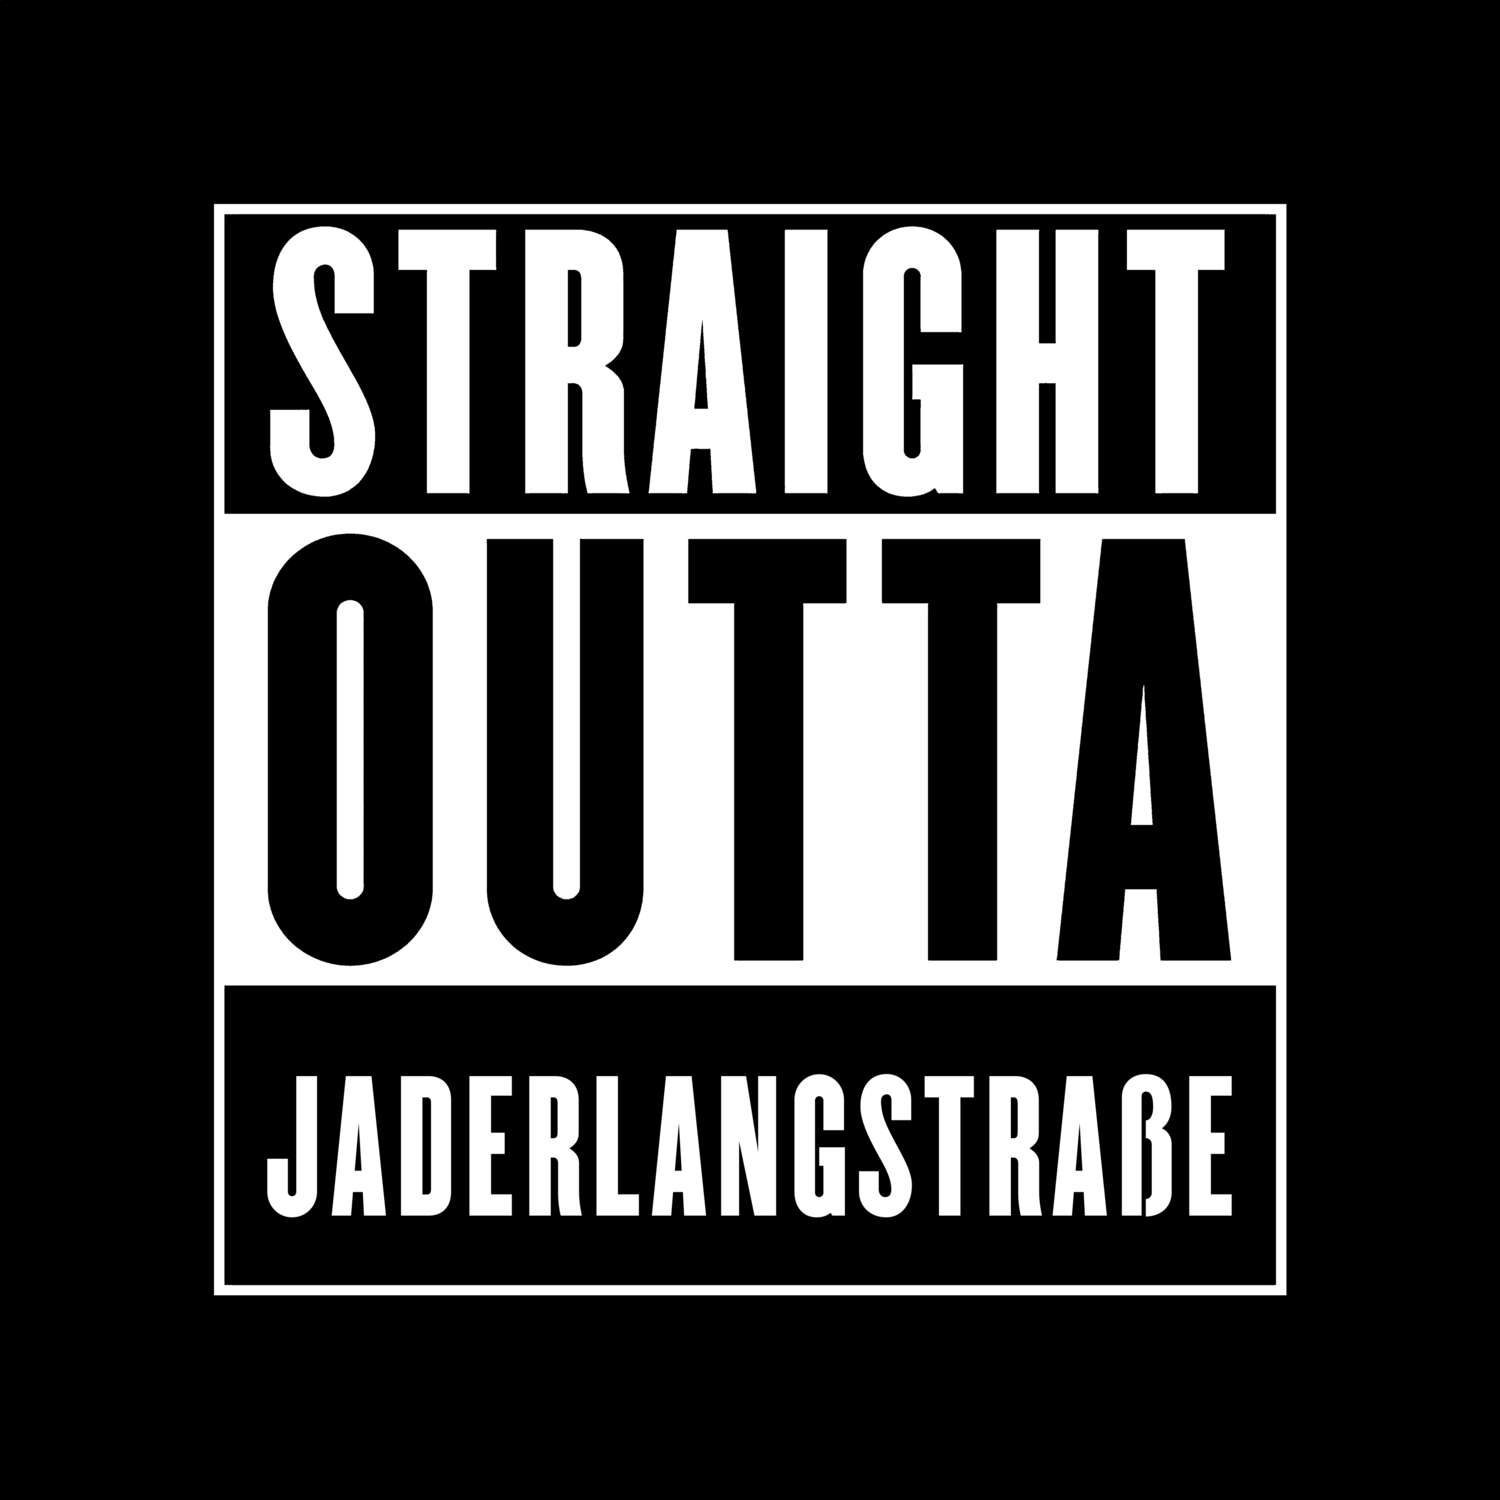 Jaderlangstraße T-Shirt »Straight Outta«